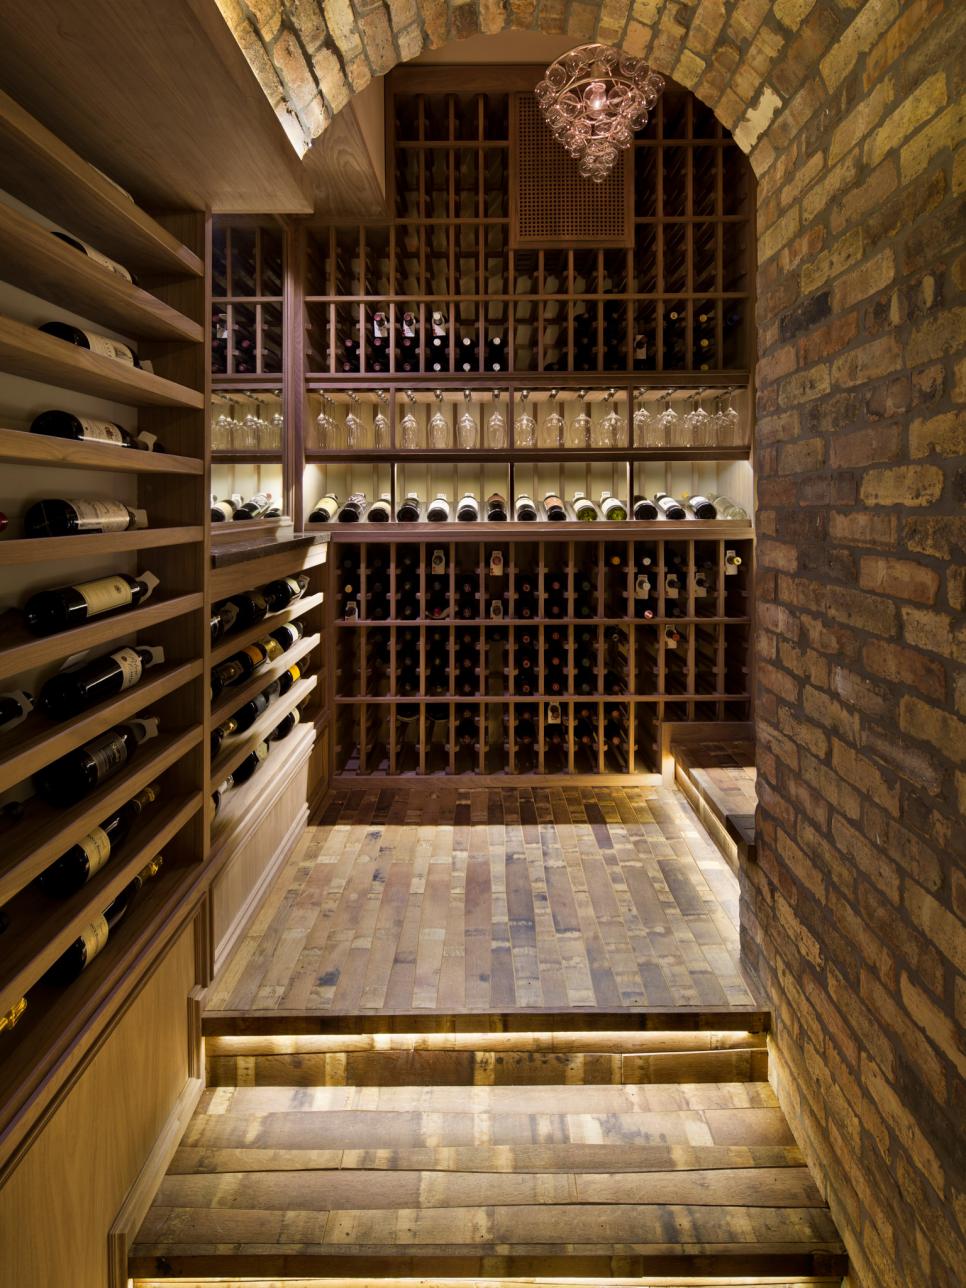 Shelf and stair lights illuminate the wine cellar.